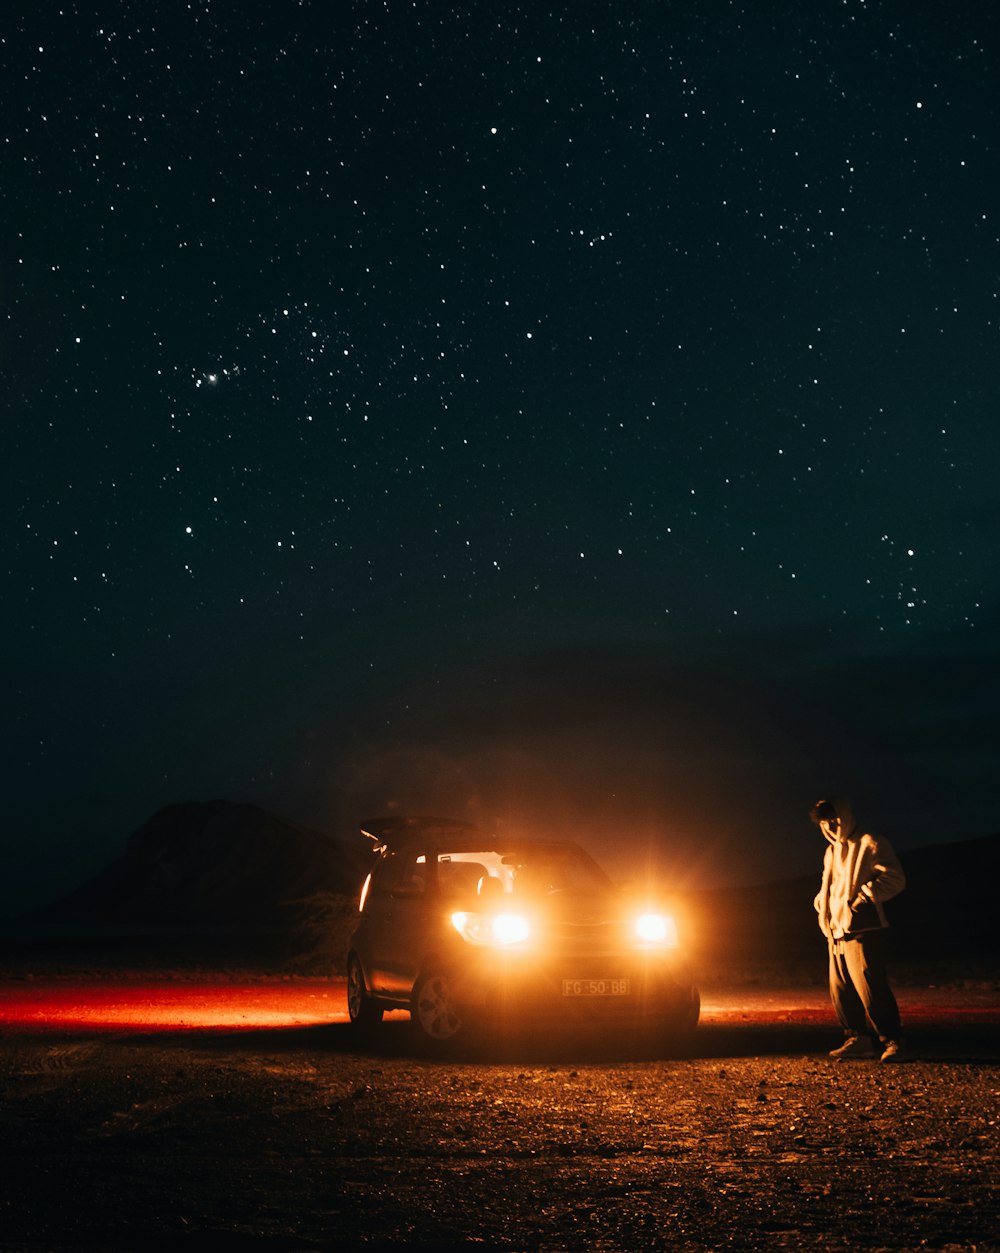 a man standing next to a car under a night sky